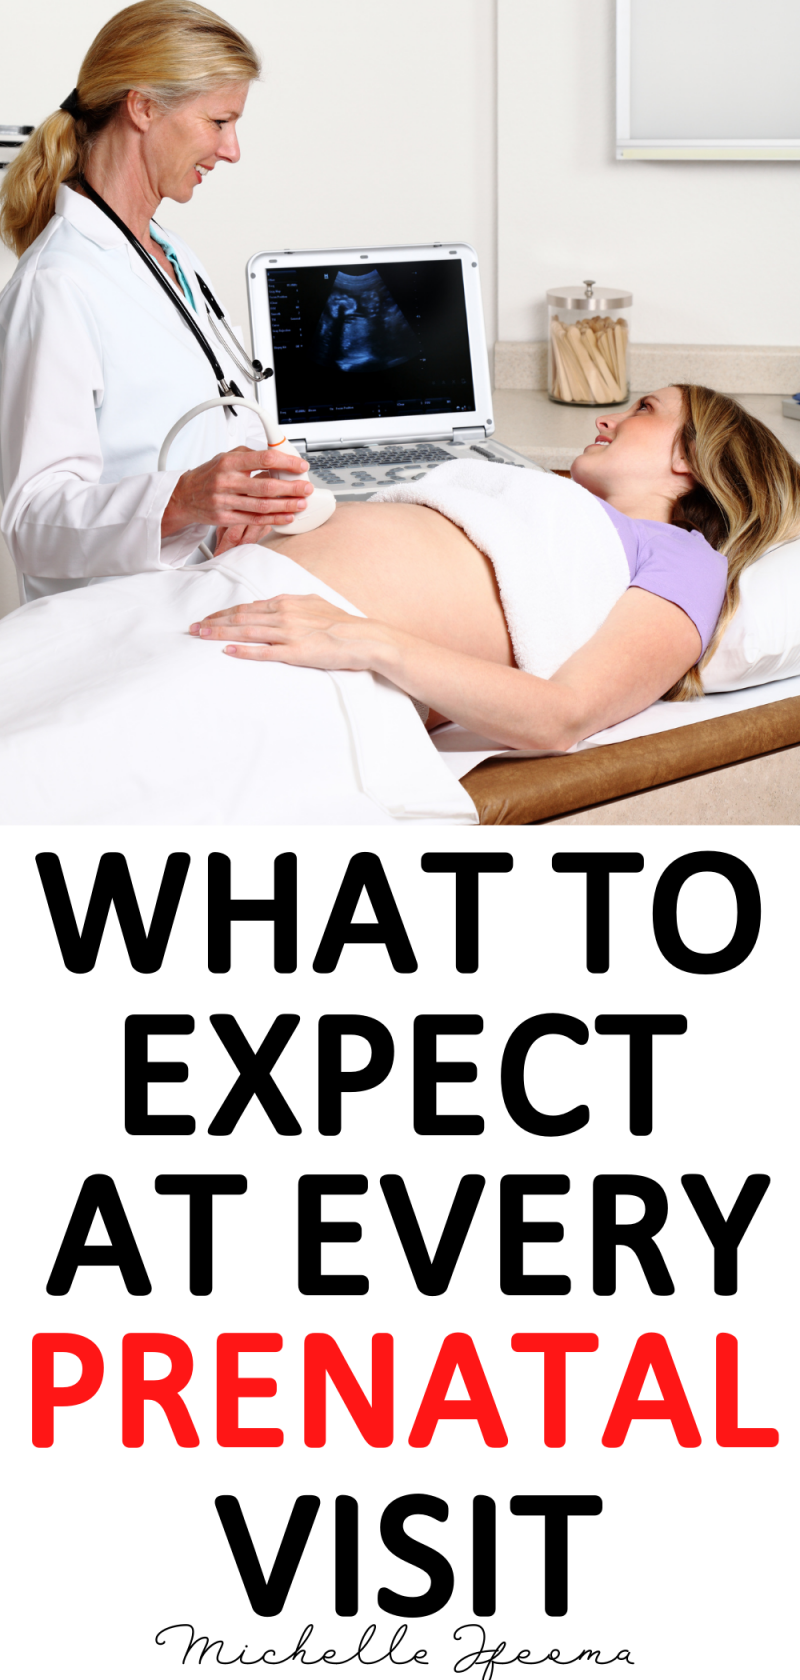 prenatal visit meaning